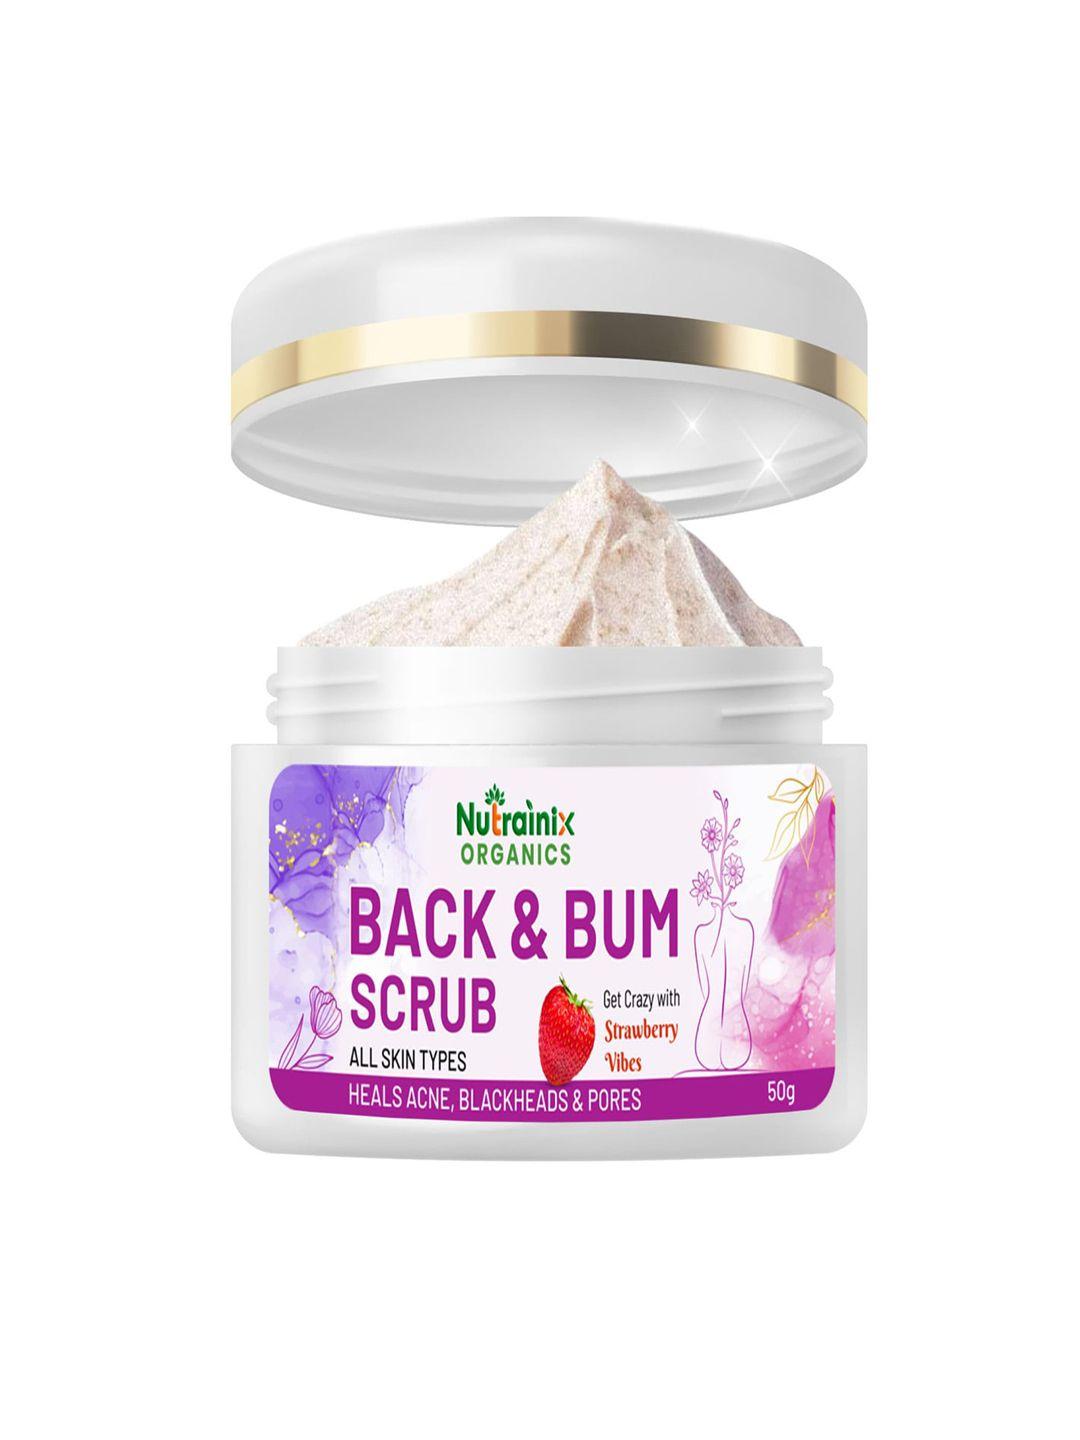 nutrainix organics peach back & bum scrub, reduces dark spot and acne - 50g